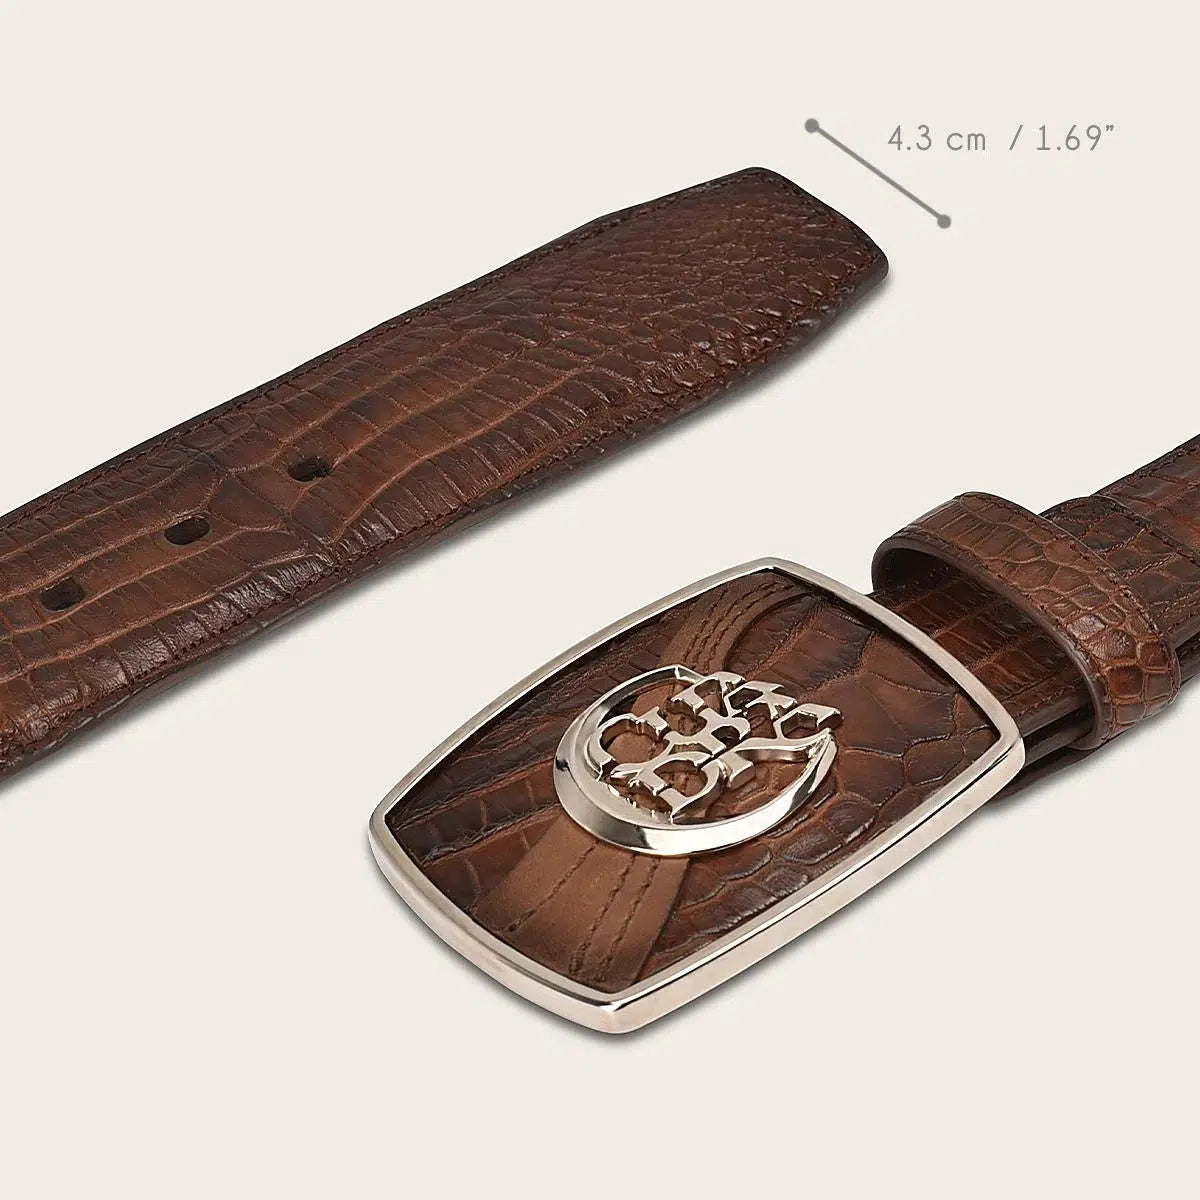 CV499MO - Cuadra brown western fashion Moreleti belt for men-Kuet.us